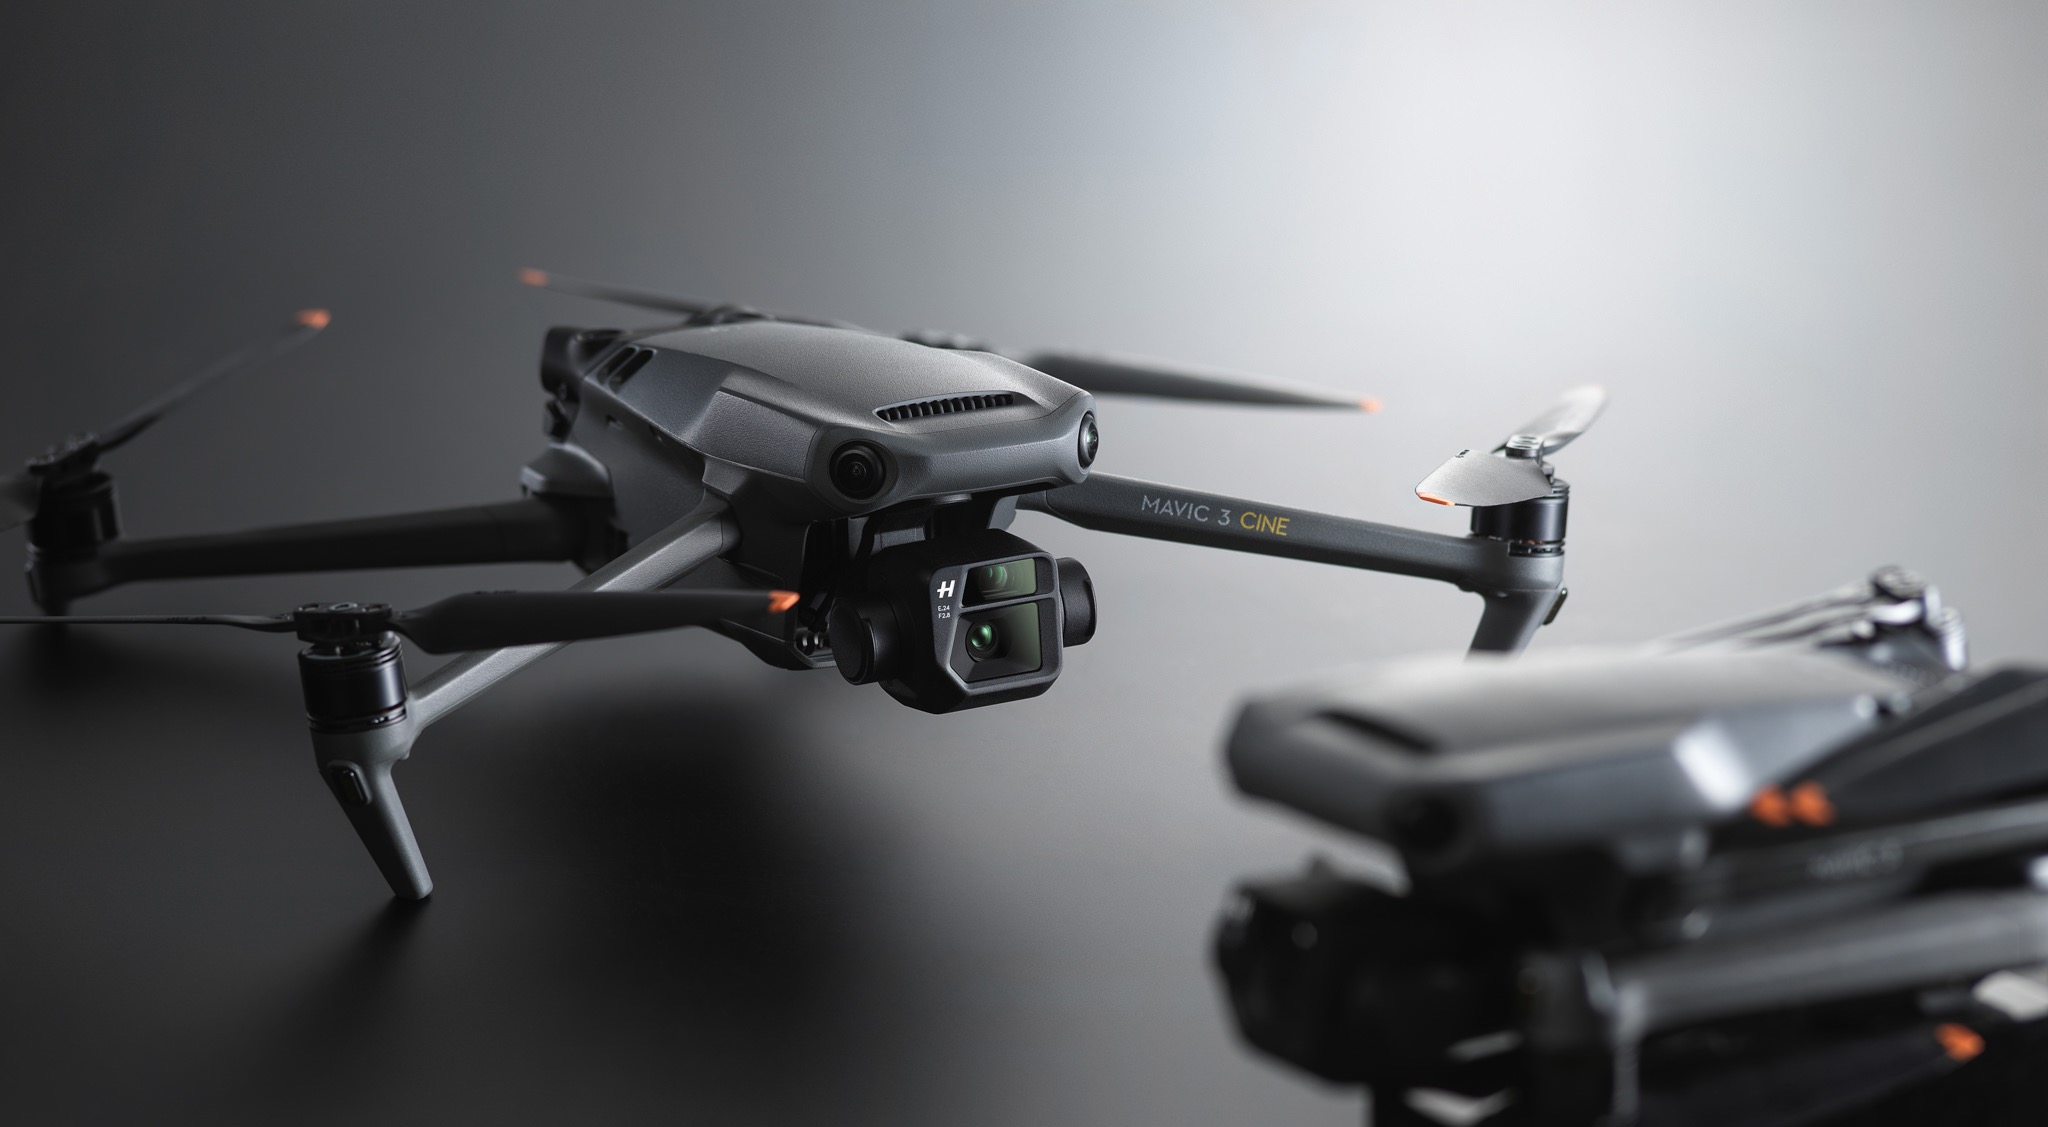 DJI Announces the Mavic 3 and Mavic 3 Cine Dual-Camera Drones - Exibart